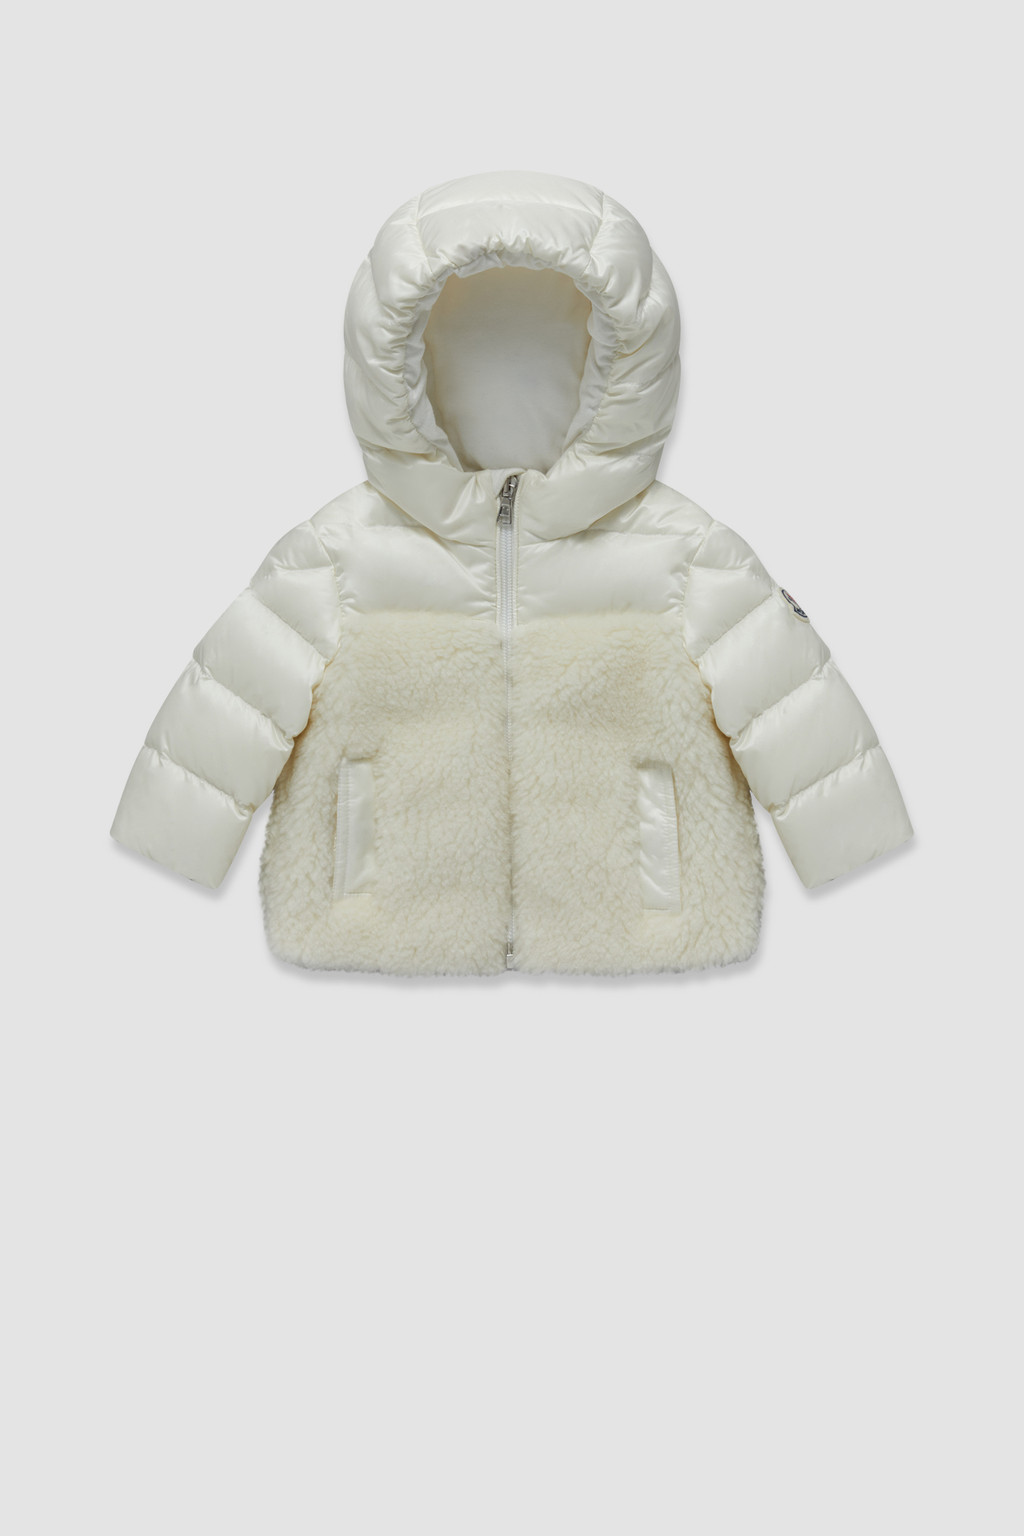 Spring Baby Kids Coats Cartoon Bear Double-Faced Hooded Jackets Girls Boys  Cotton Casual Childrens Windbreaker Outerwear 0-6Y - AliExpress